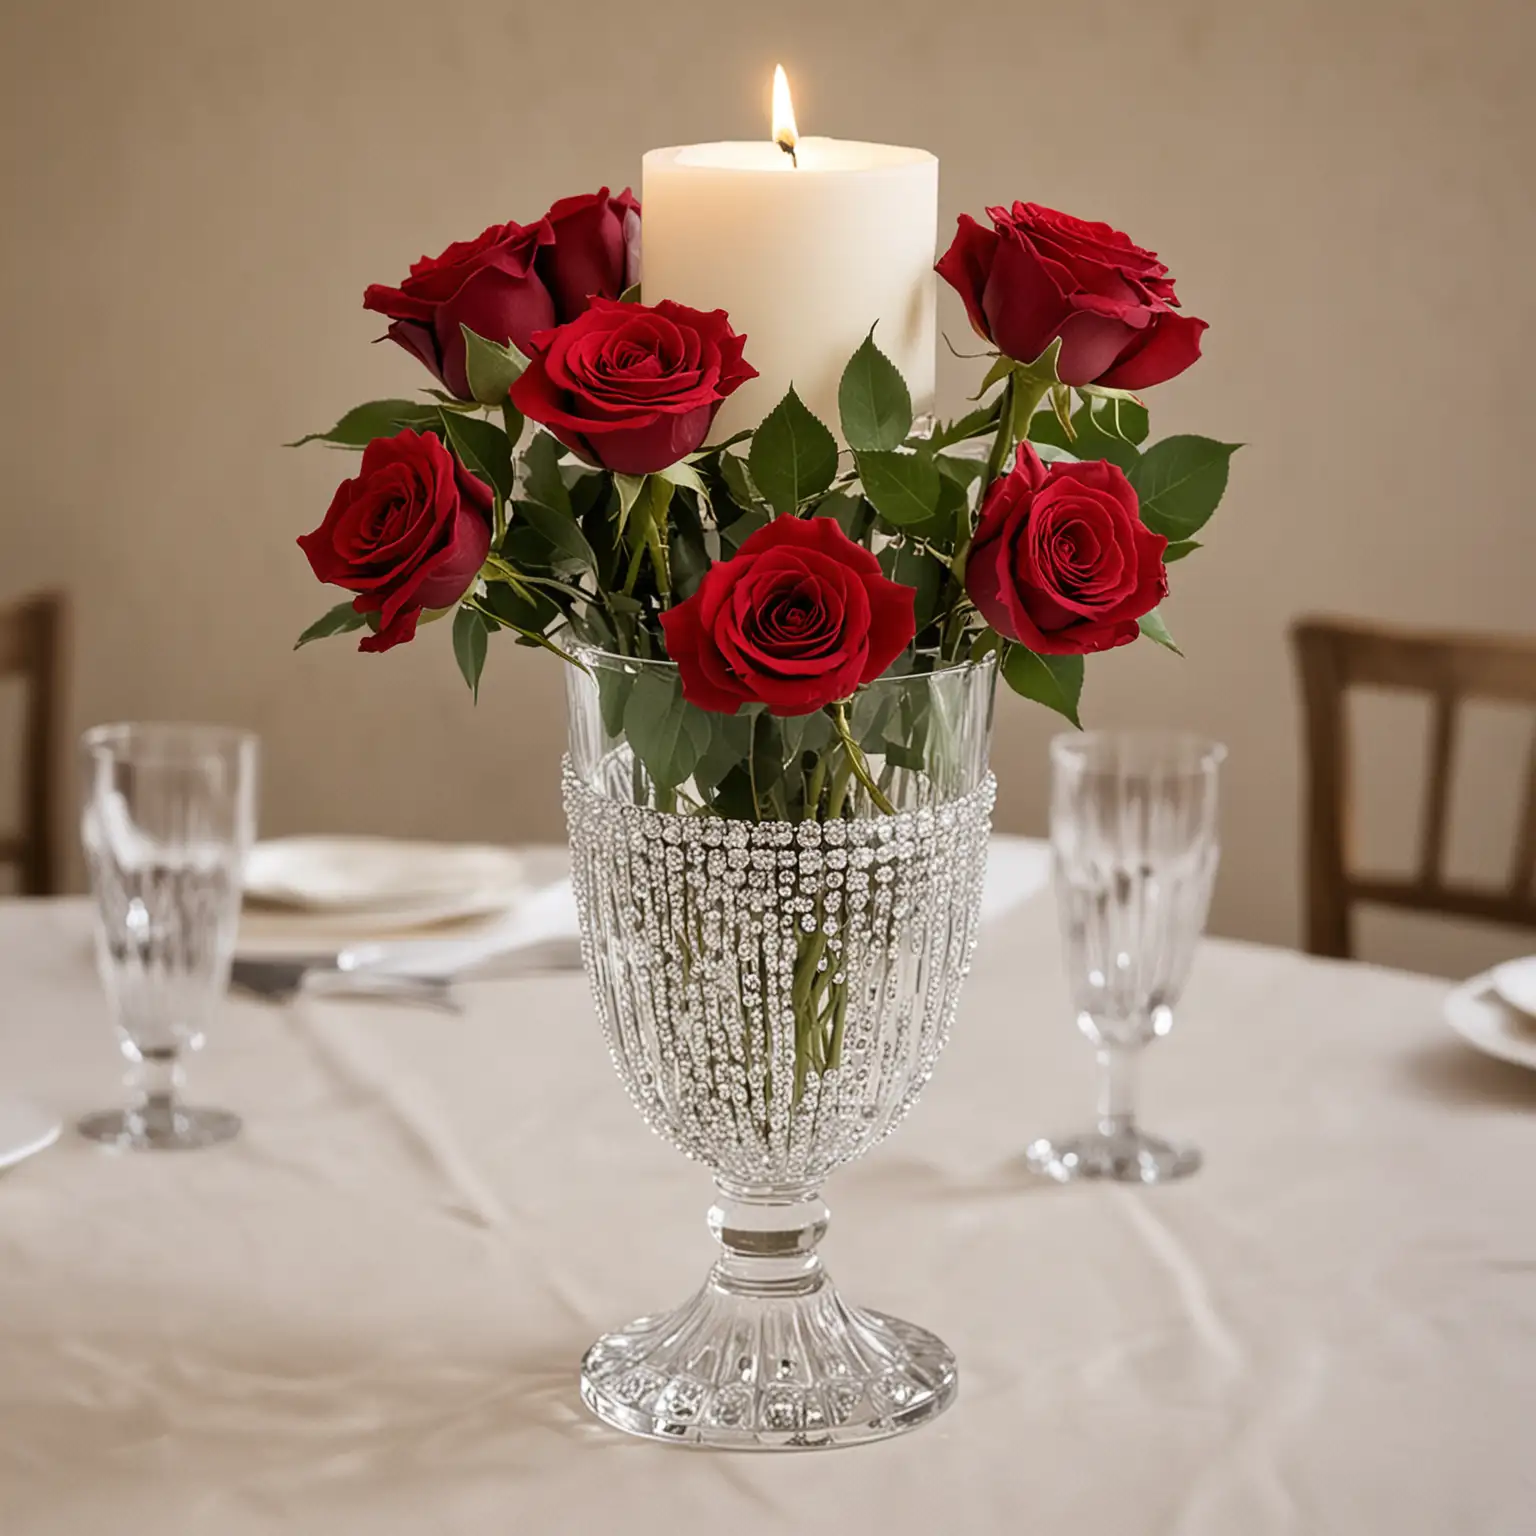 Elegant-DIY-Centerpiece-with-Red-Roses-in-Crystal-Vase